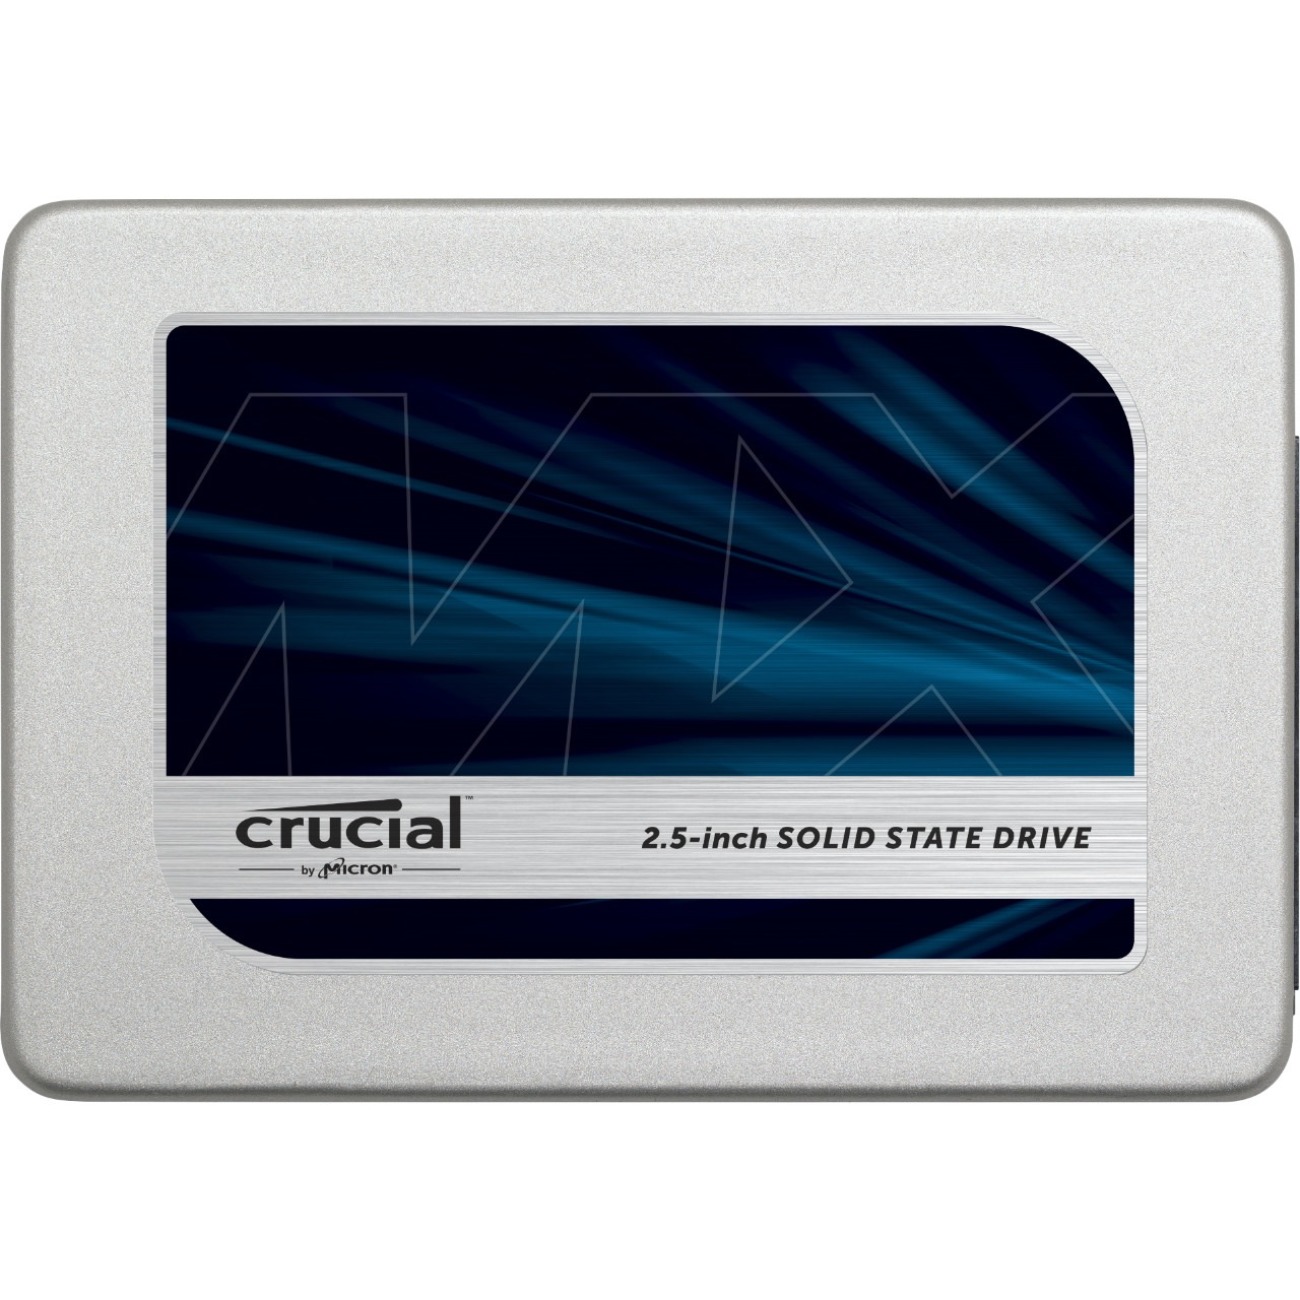 Crucial CT275MX300SSD1 MX300 2.5" 275GB SATA III 3D NAND Internal SSD - image 2 of 2